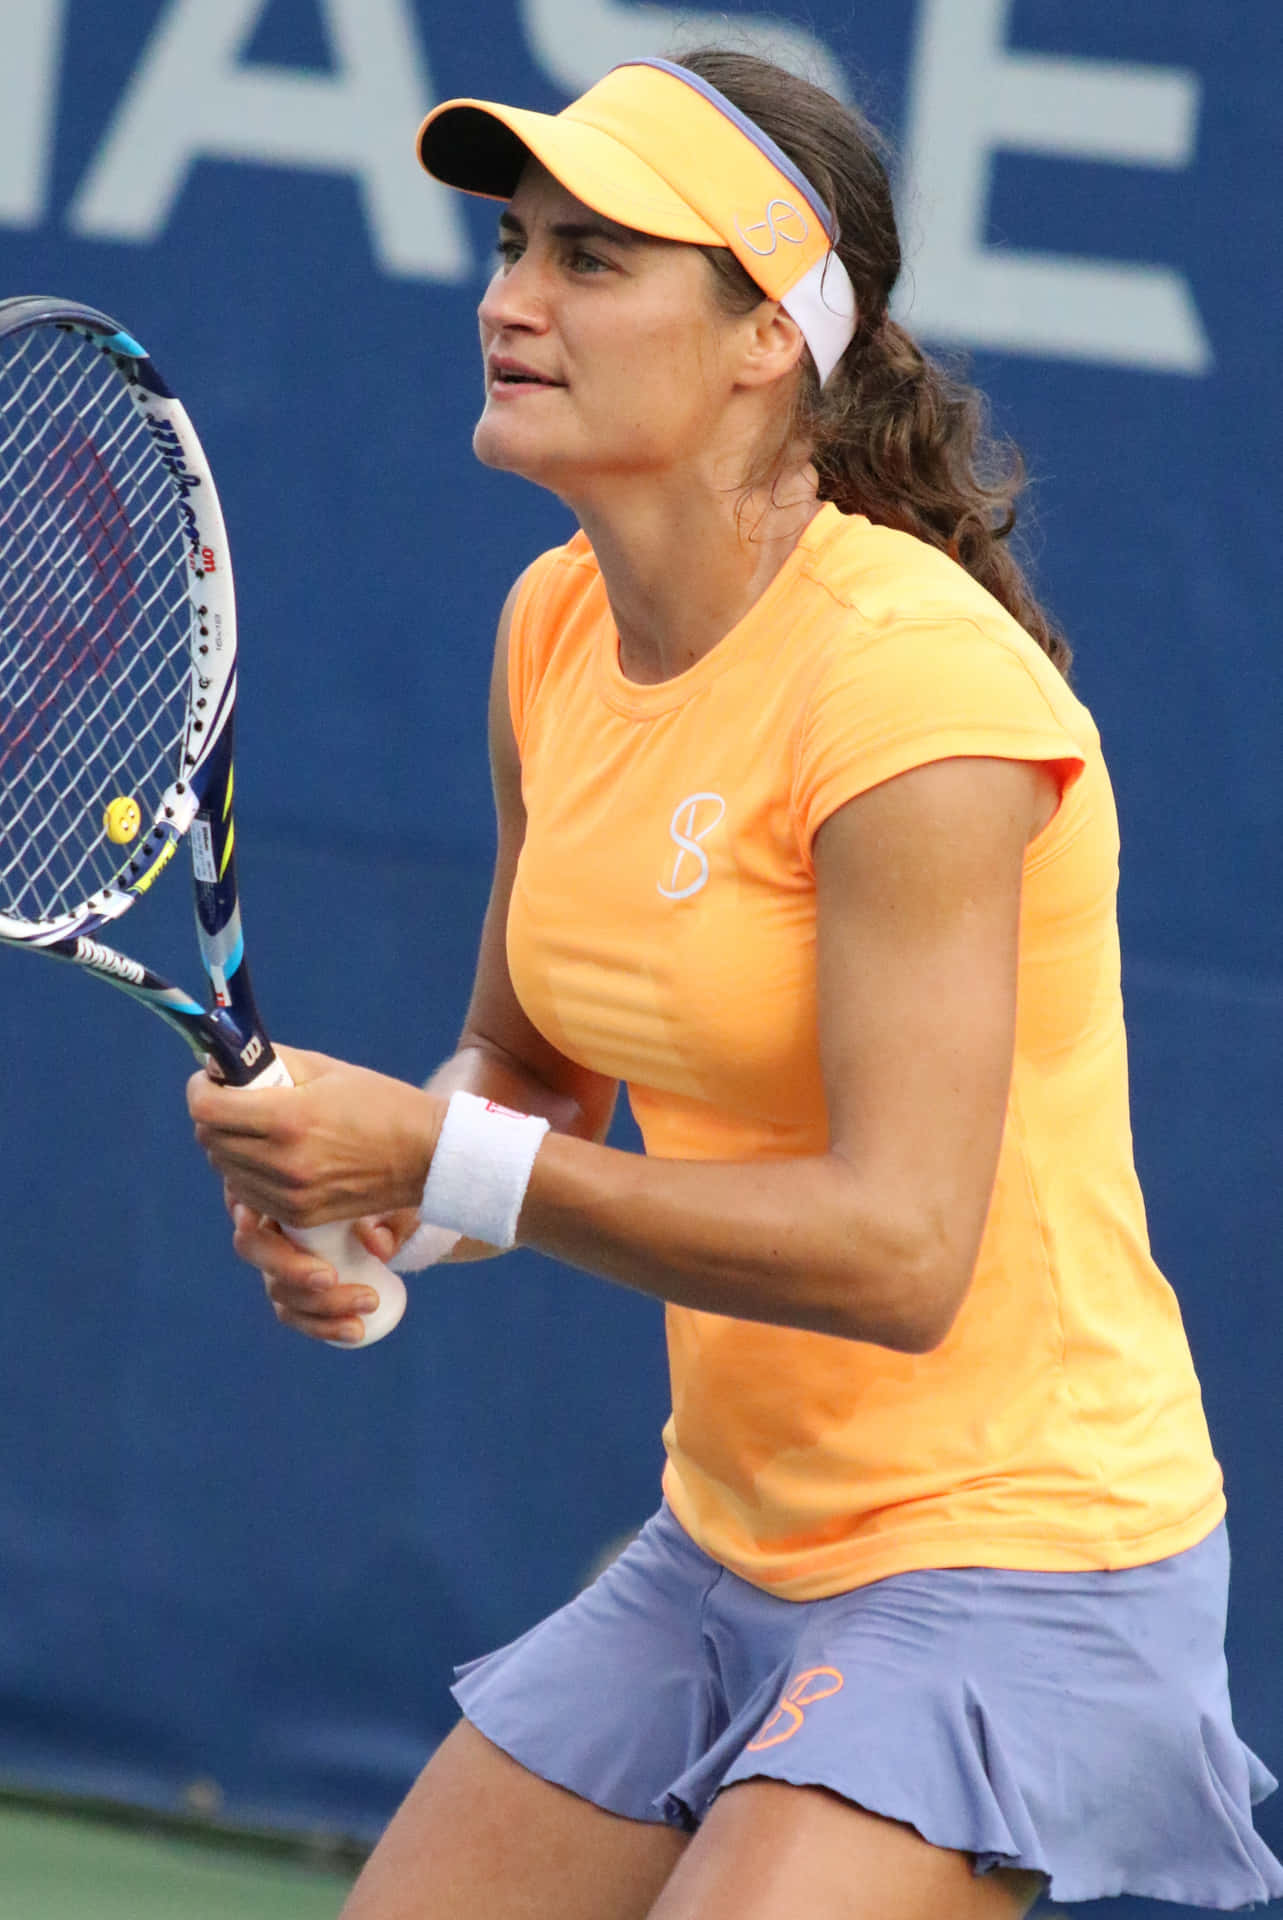 Monicaniculescu En Traje De Tenis Naranja. Fondo de pantalla